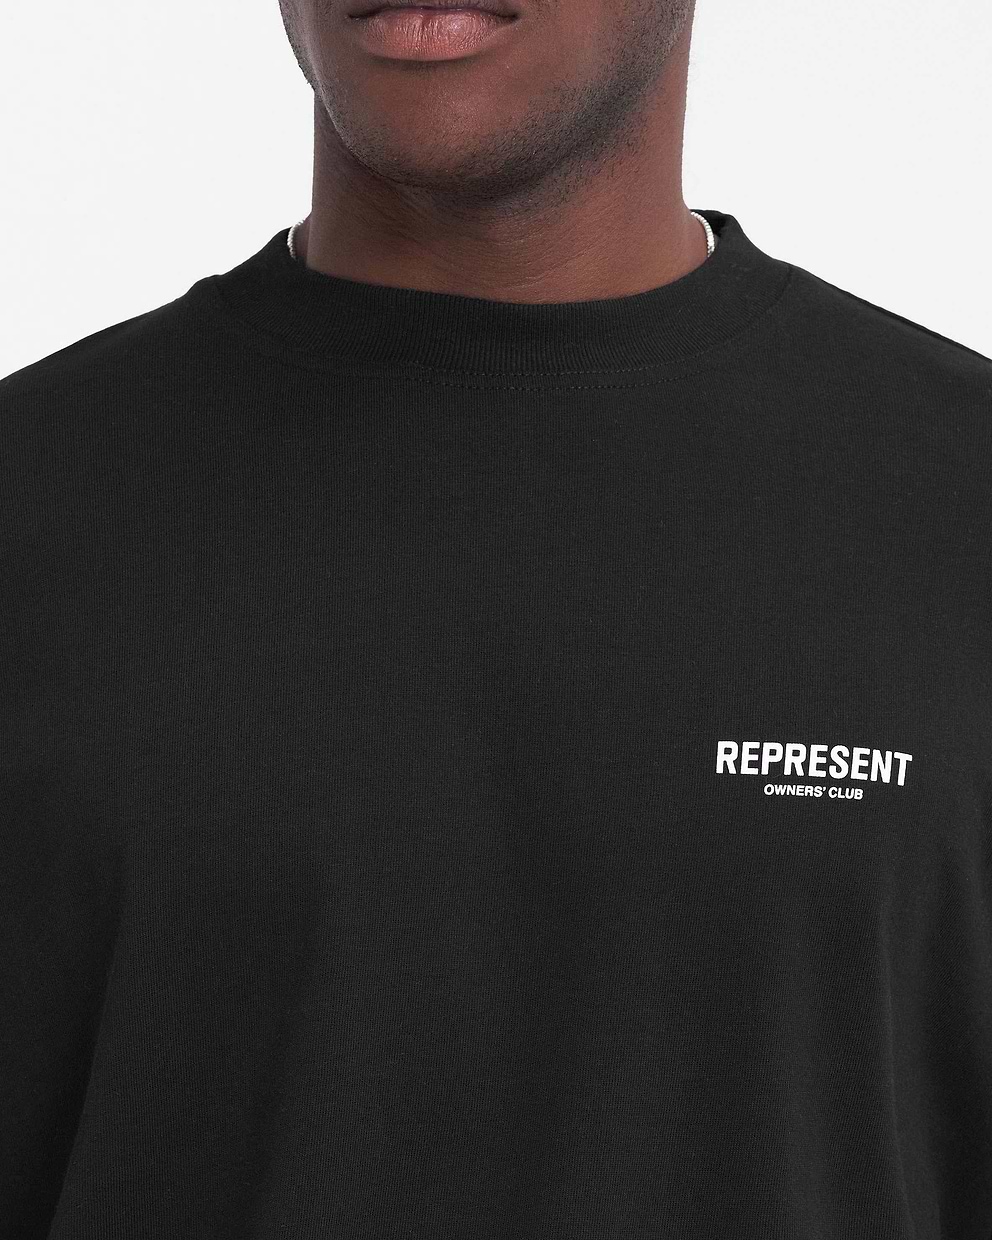 Owners' Club Long Sleeve T-Shirt | Black | REPRESENT CLO